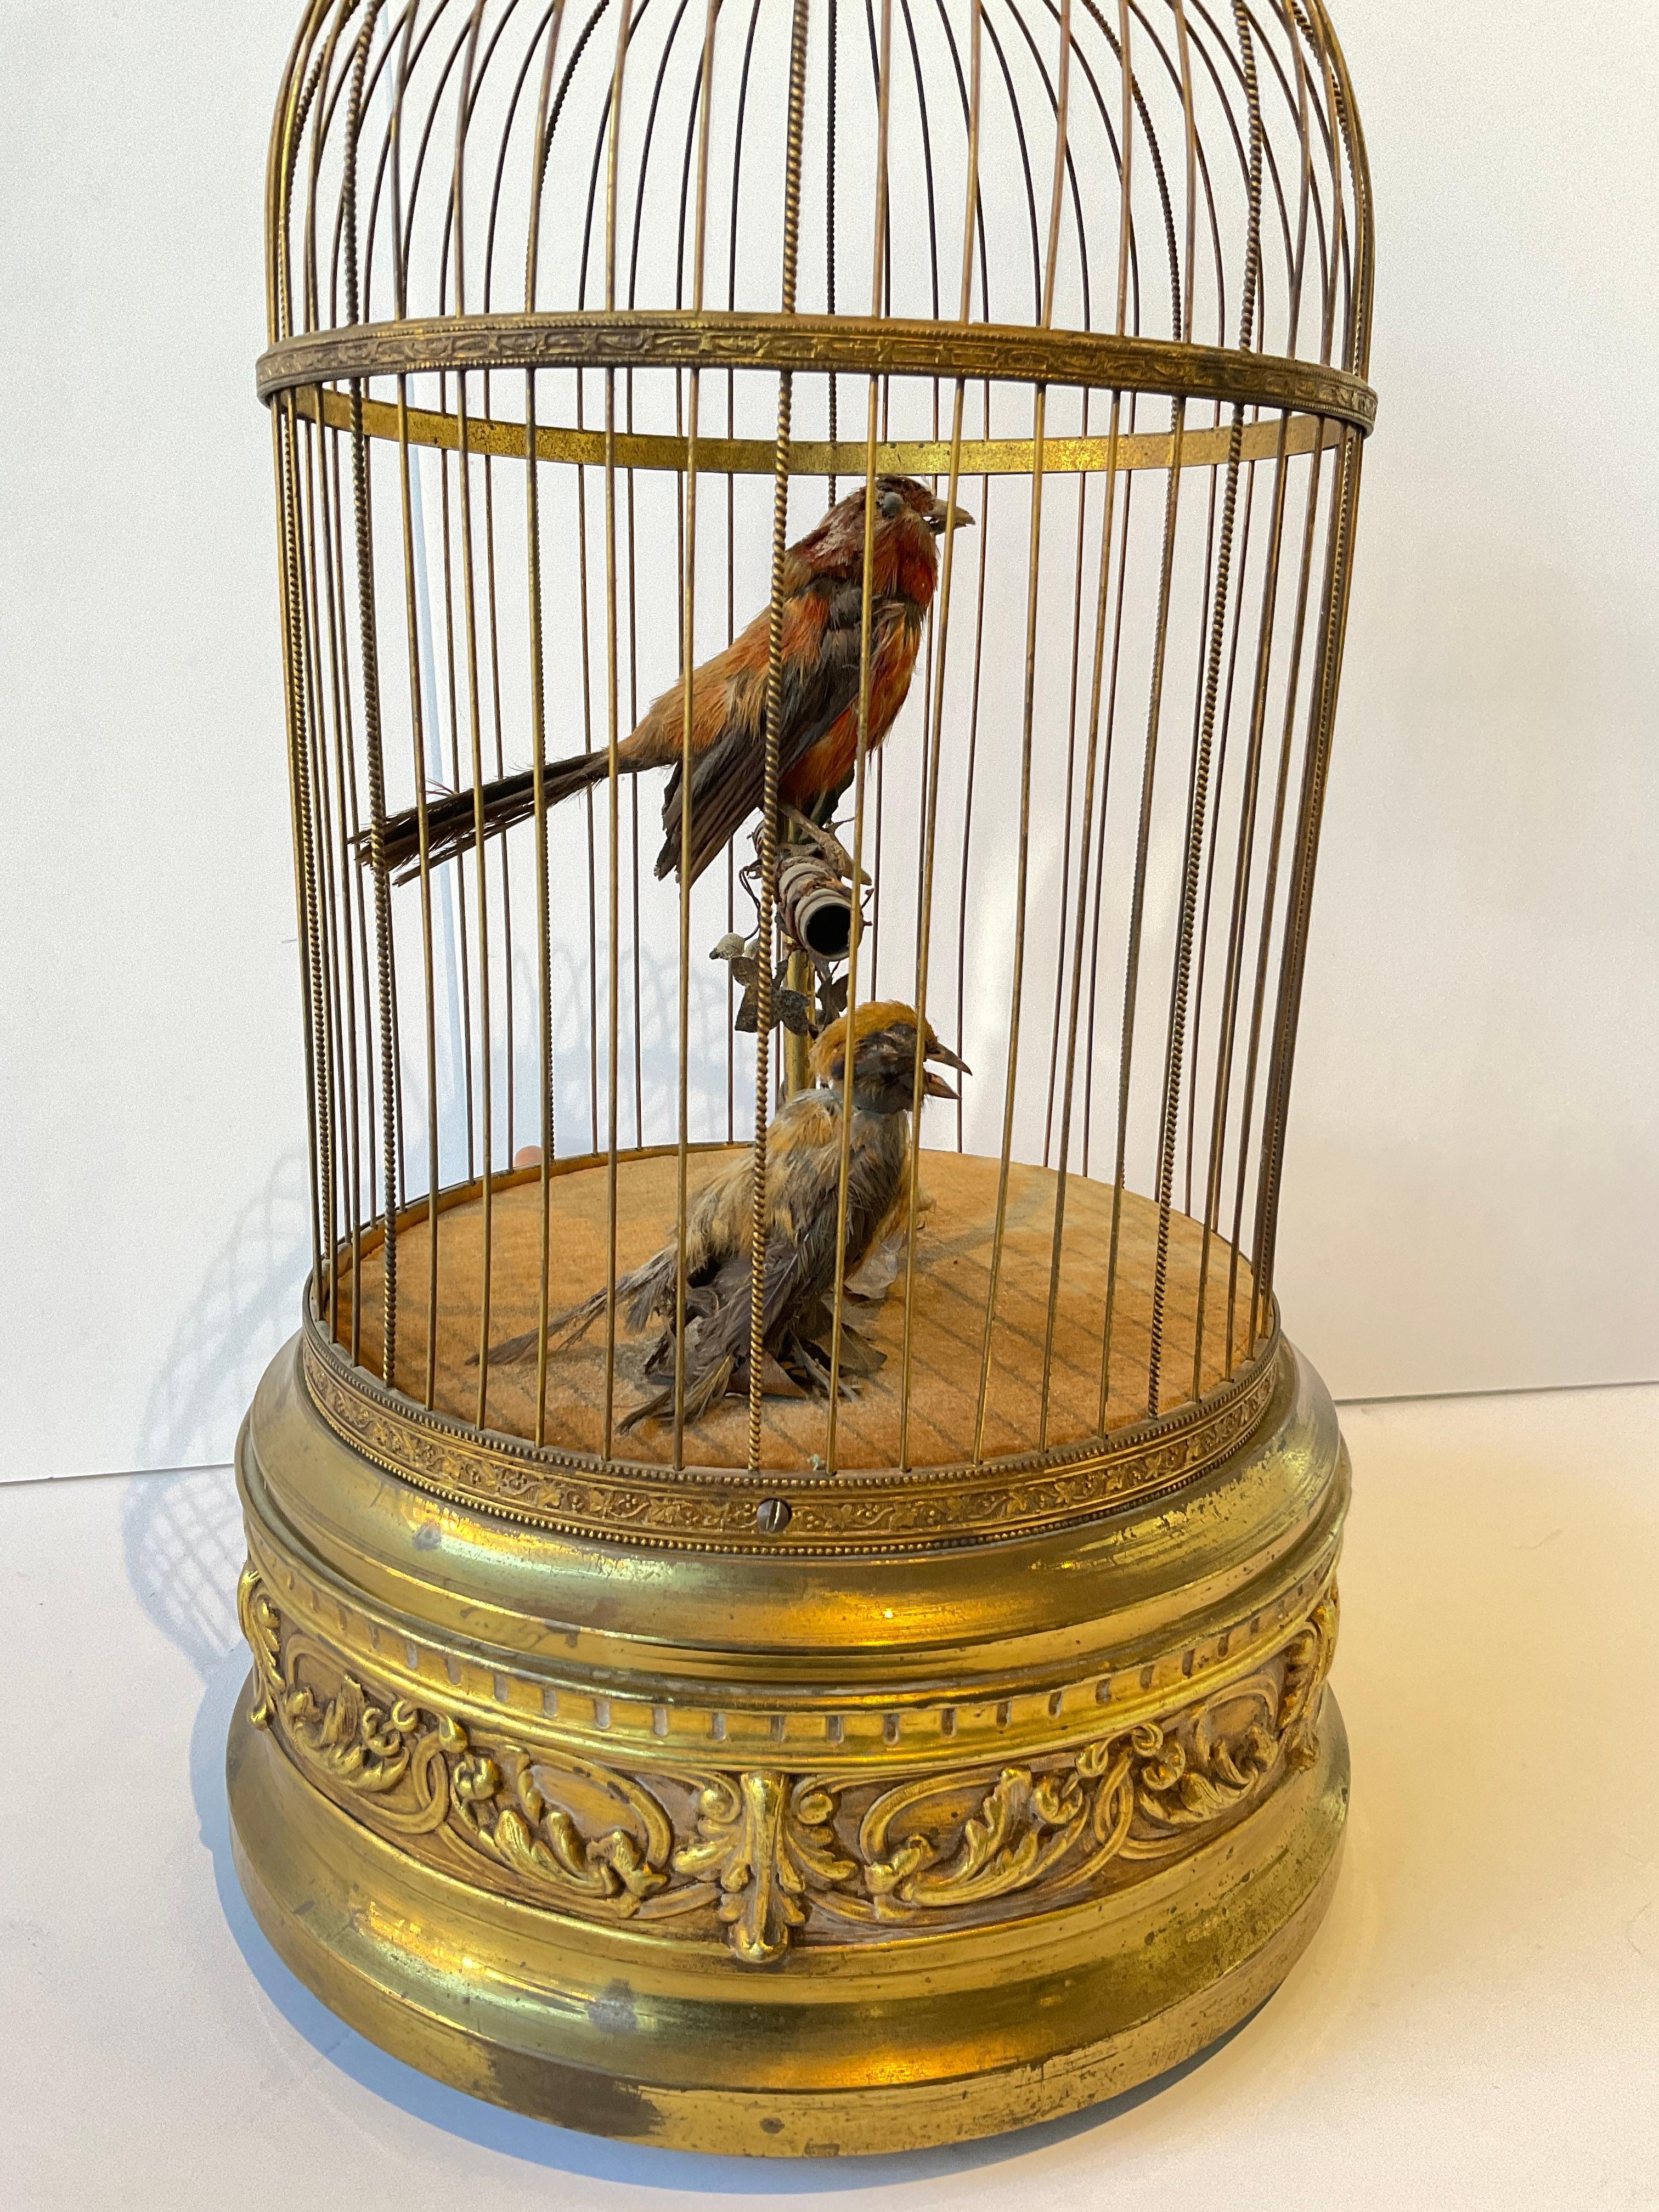 1915, French Automaton Singing Birds in Birdcage 5